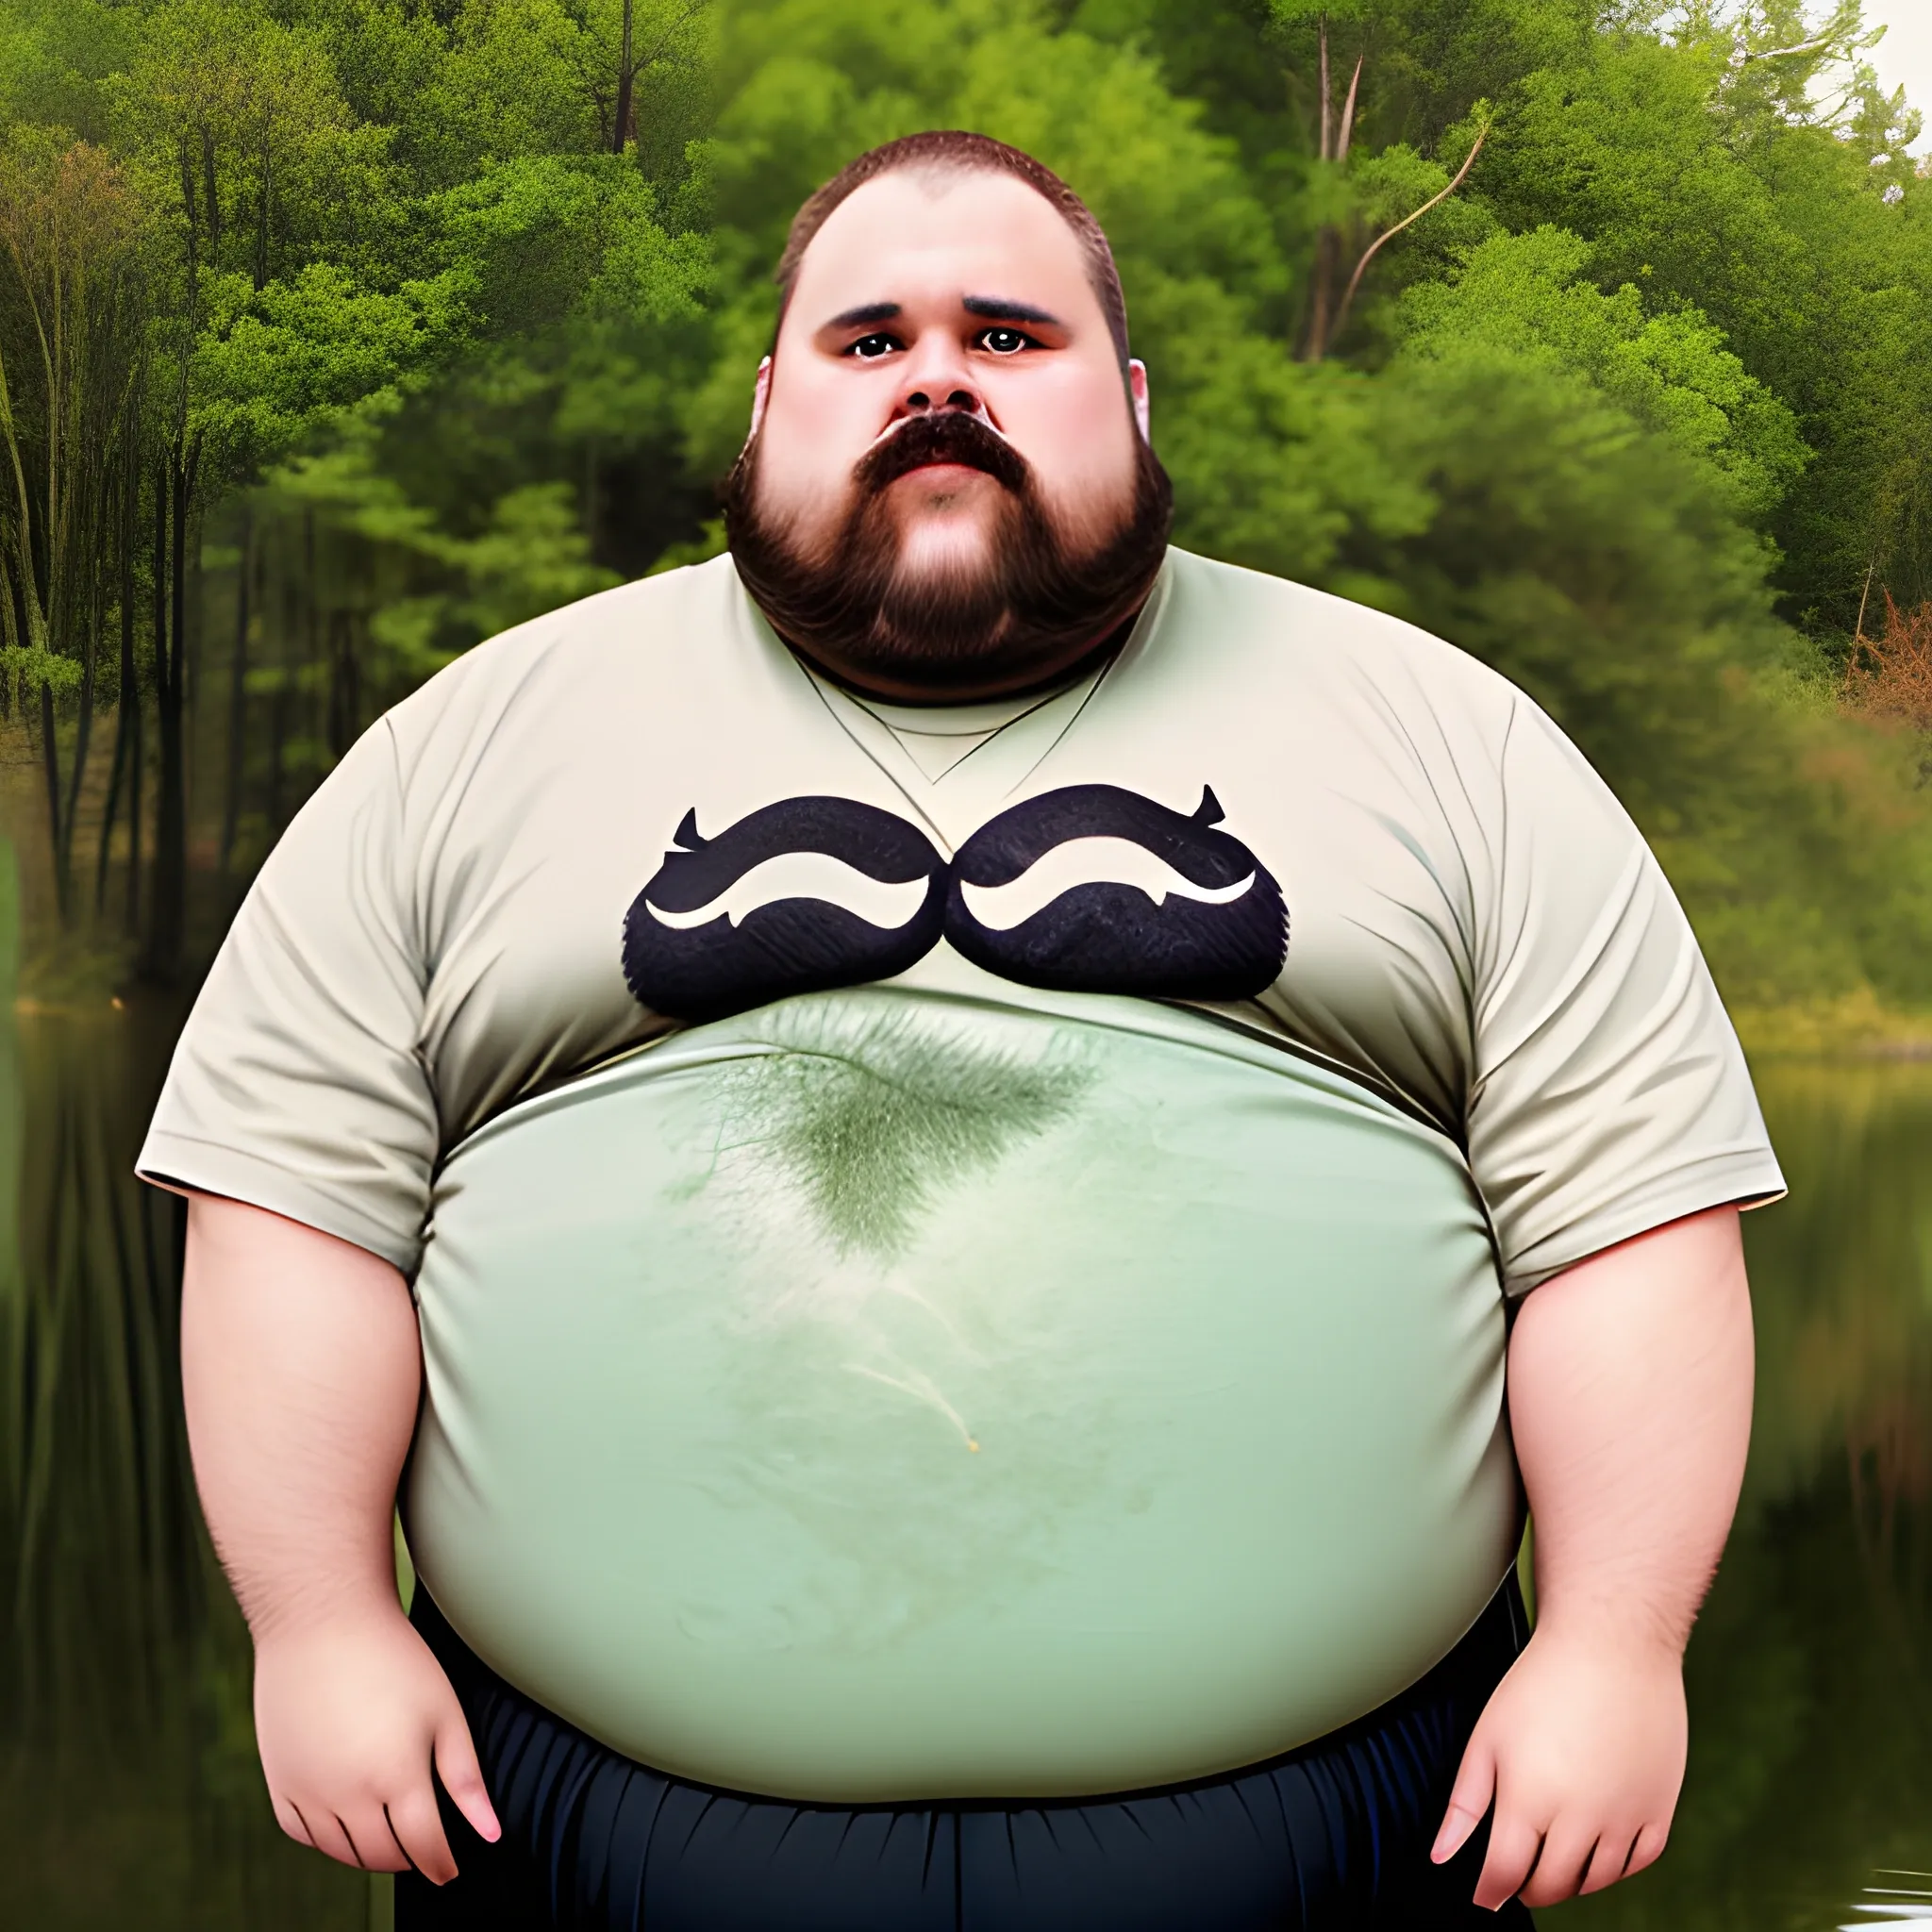 A fat man is holding a football, he has a mustache, he is wearing a fishing shirt